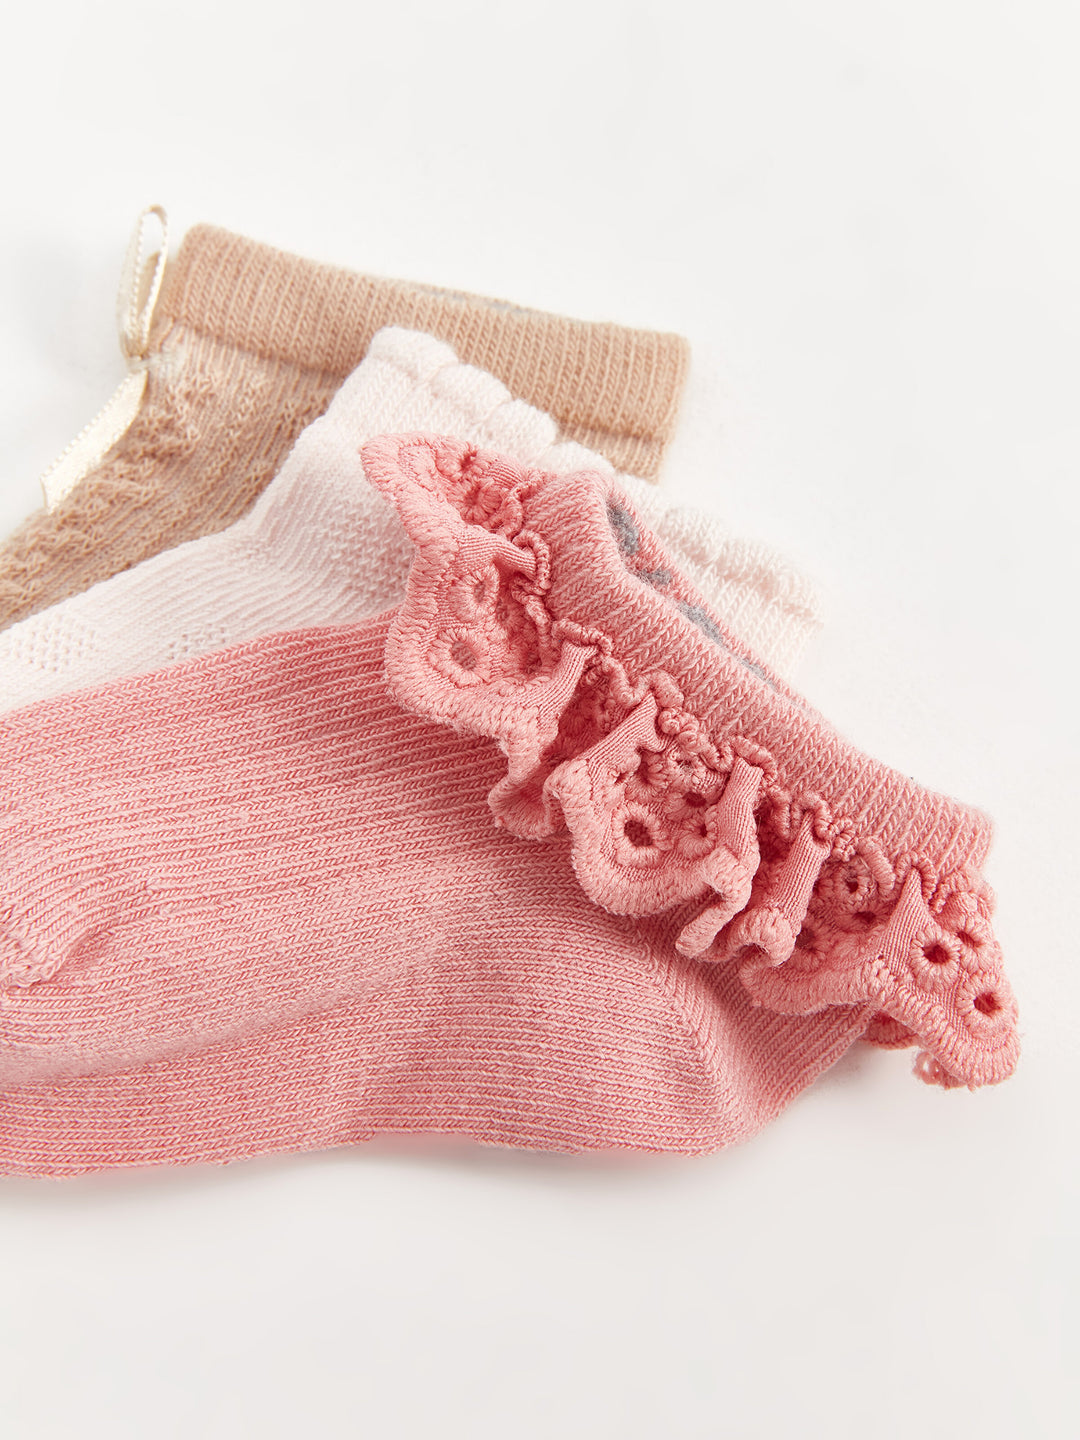 Basic Baby Girls Booties Socks 3-Piece